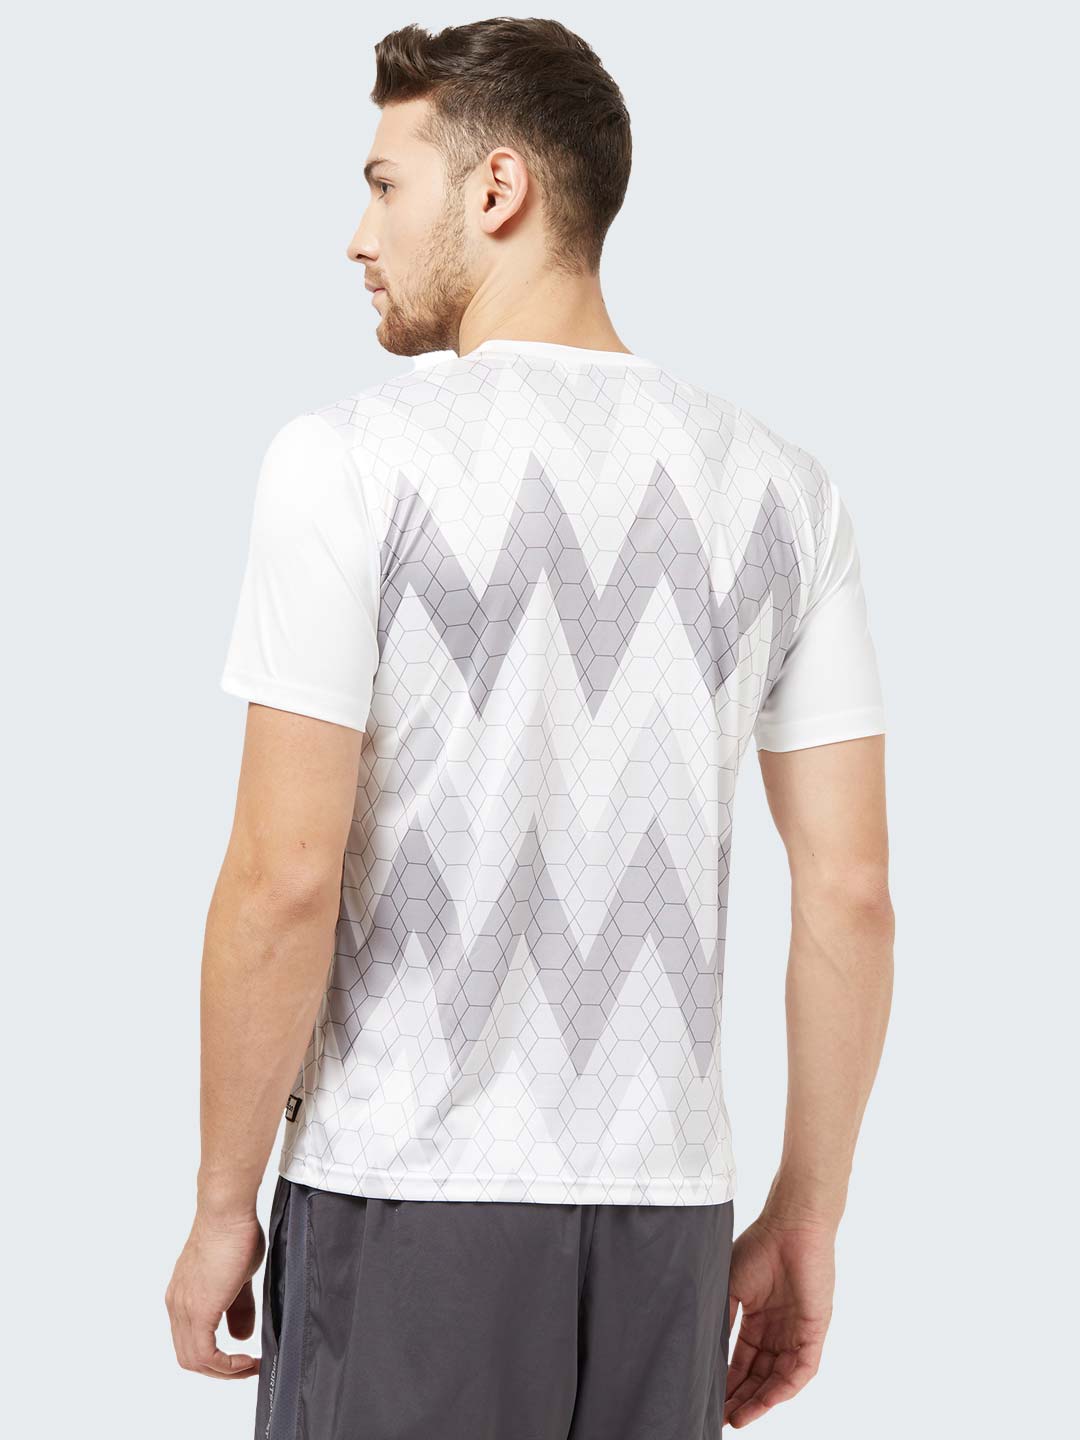 Men's Geometric Active Sports T-Shirt: White & Light Grey - Front